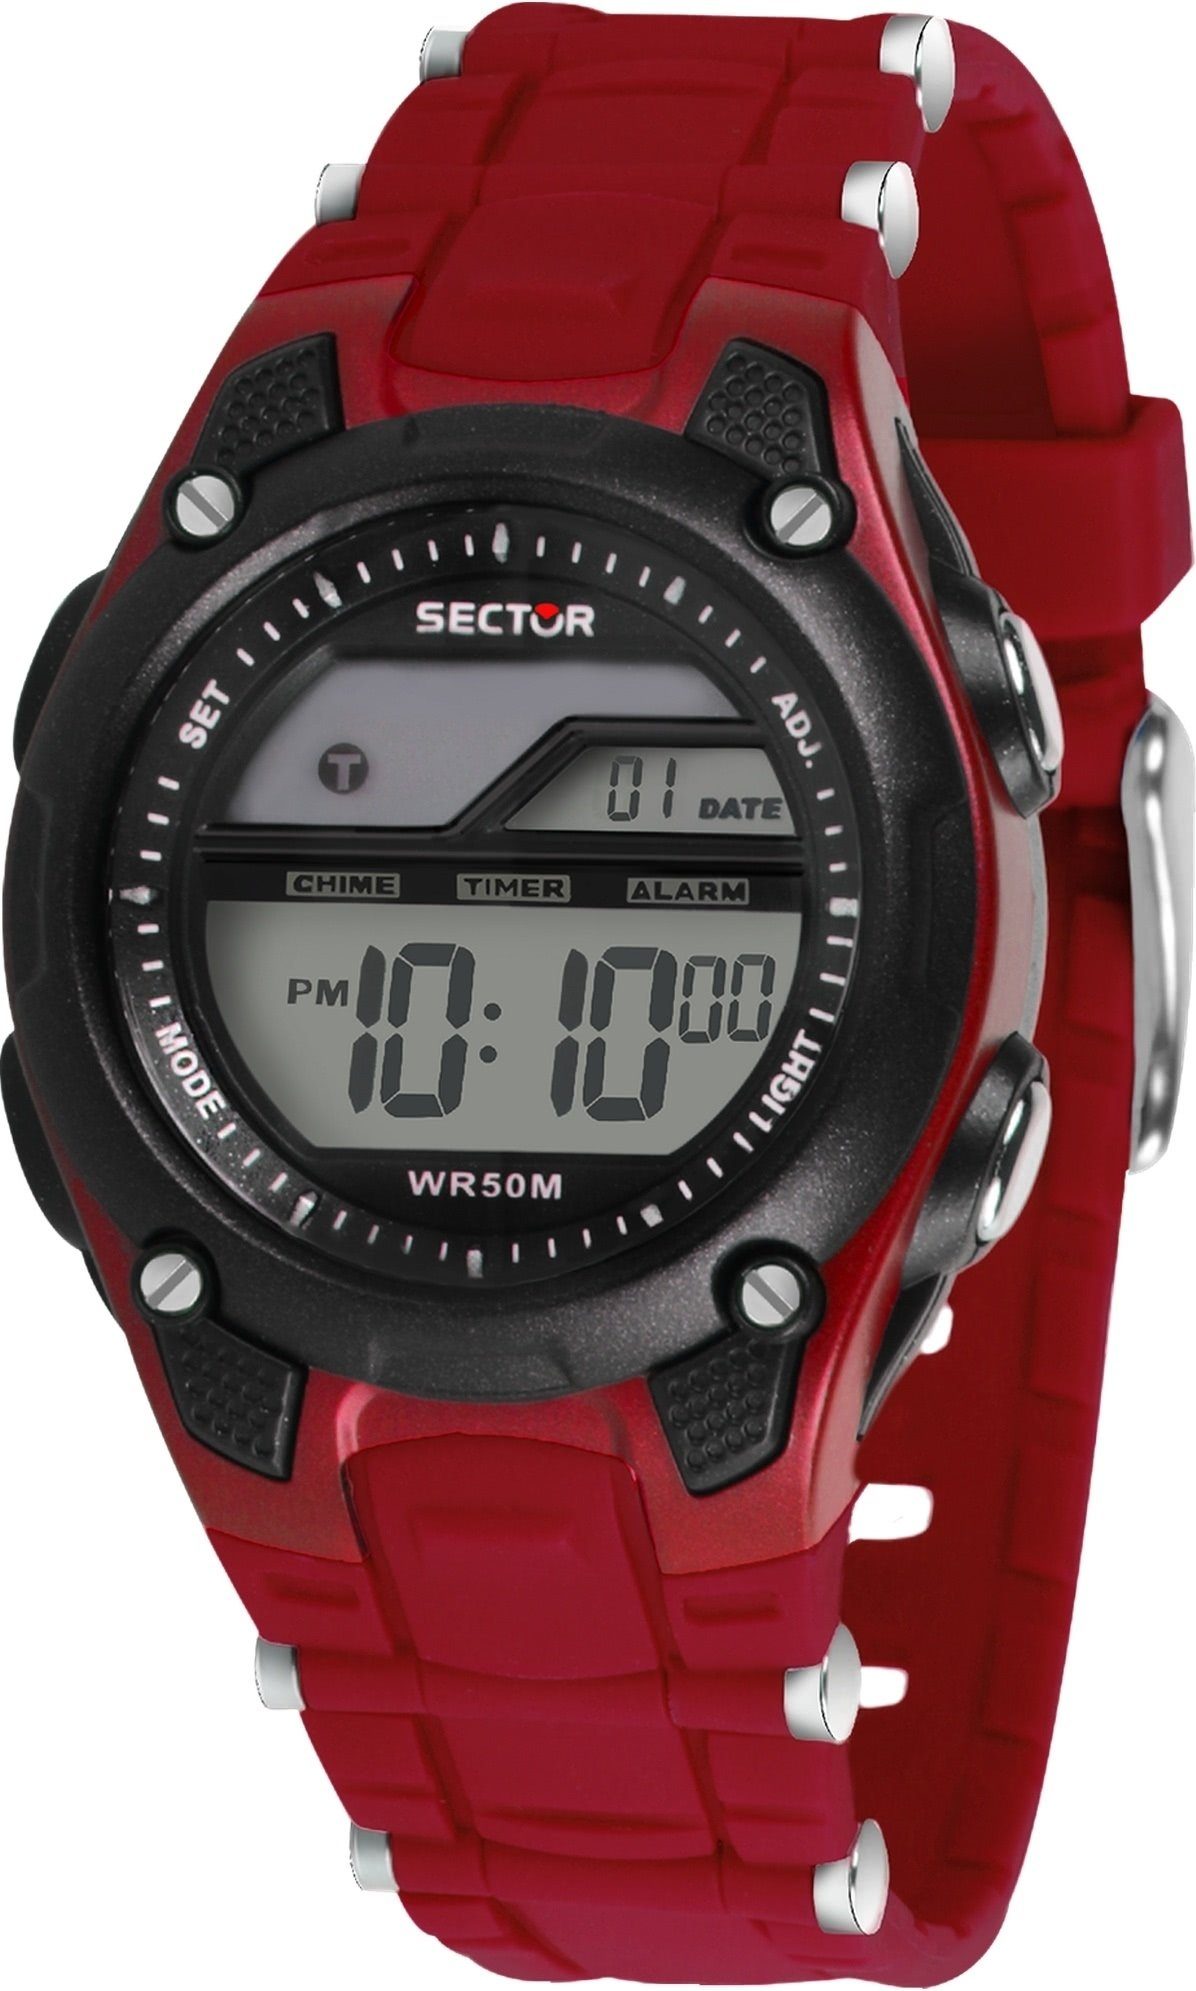 Digitaluhr Kautschukarmband Herren Casual Armbanduhr Herren Sector Armbanduhr Sector (ca. Digital, 45mm), rot, rund, groß